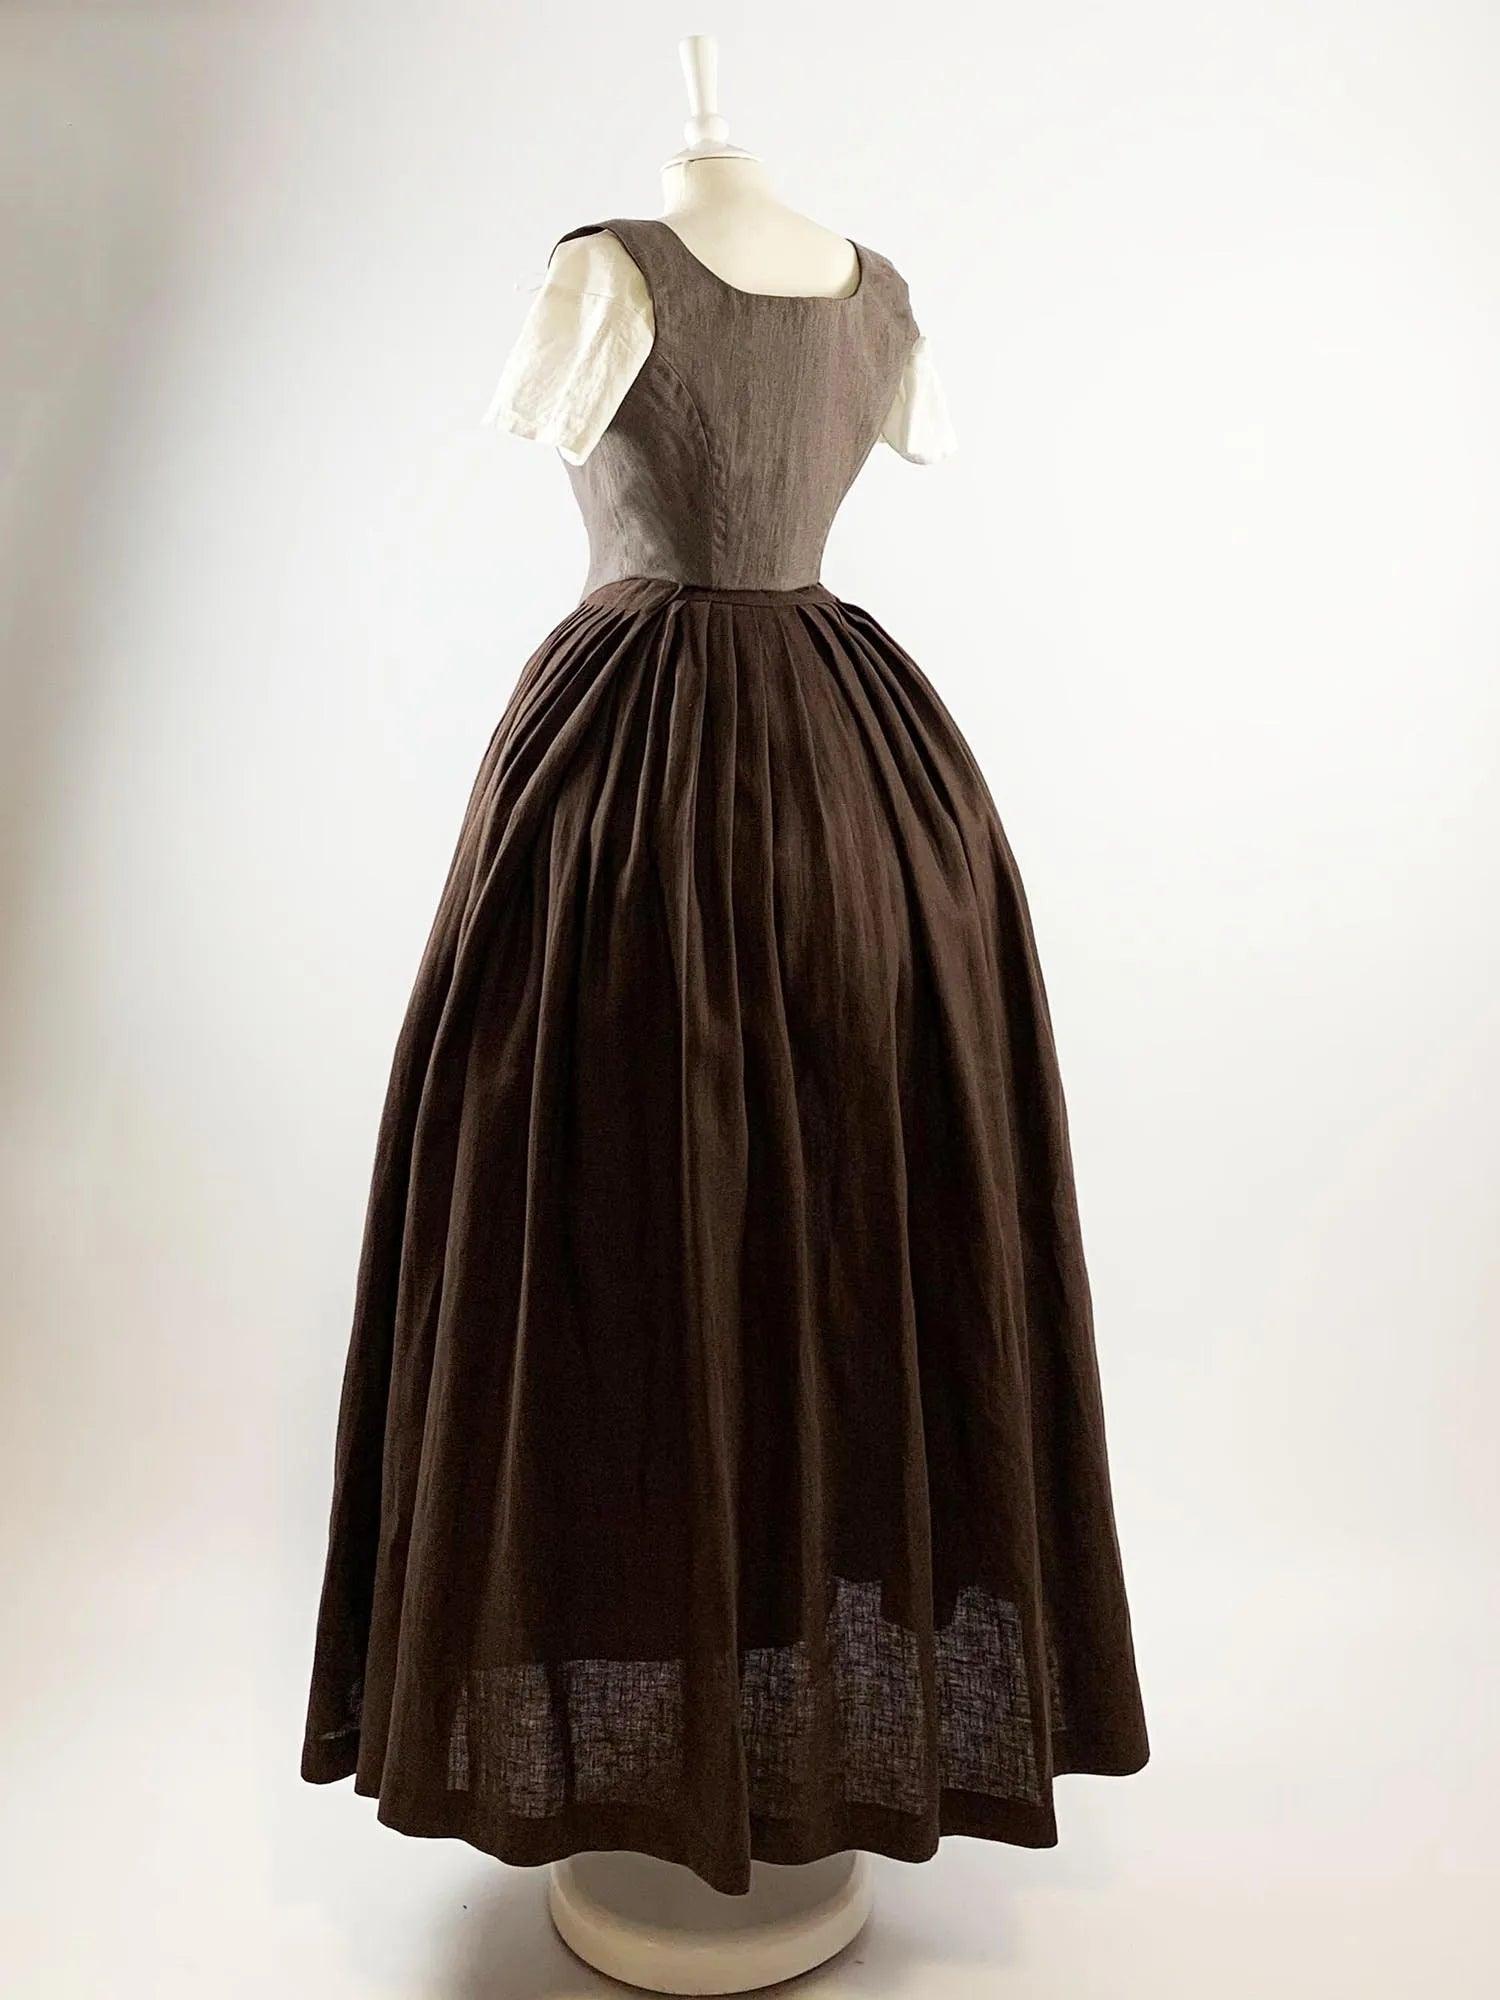 ISOLDE, Renaissance Costume in Brown Gray & Chocolate Linen - Atelier Serraspina - Costume Renaissance en Lin Marron-Gris & Chocolat